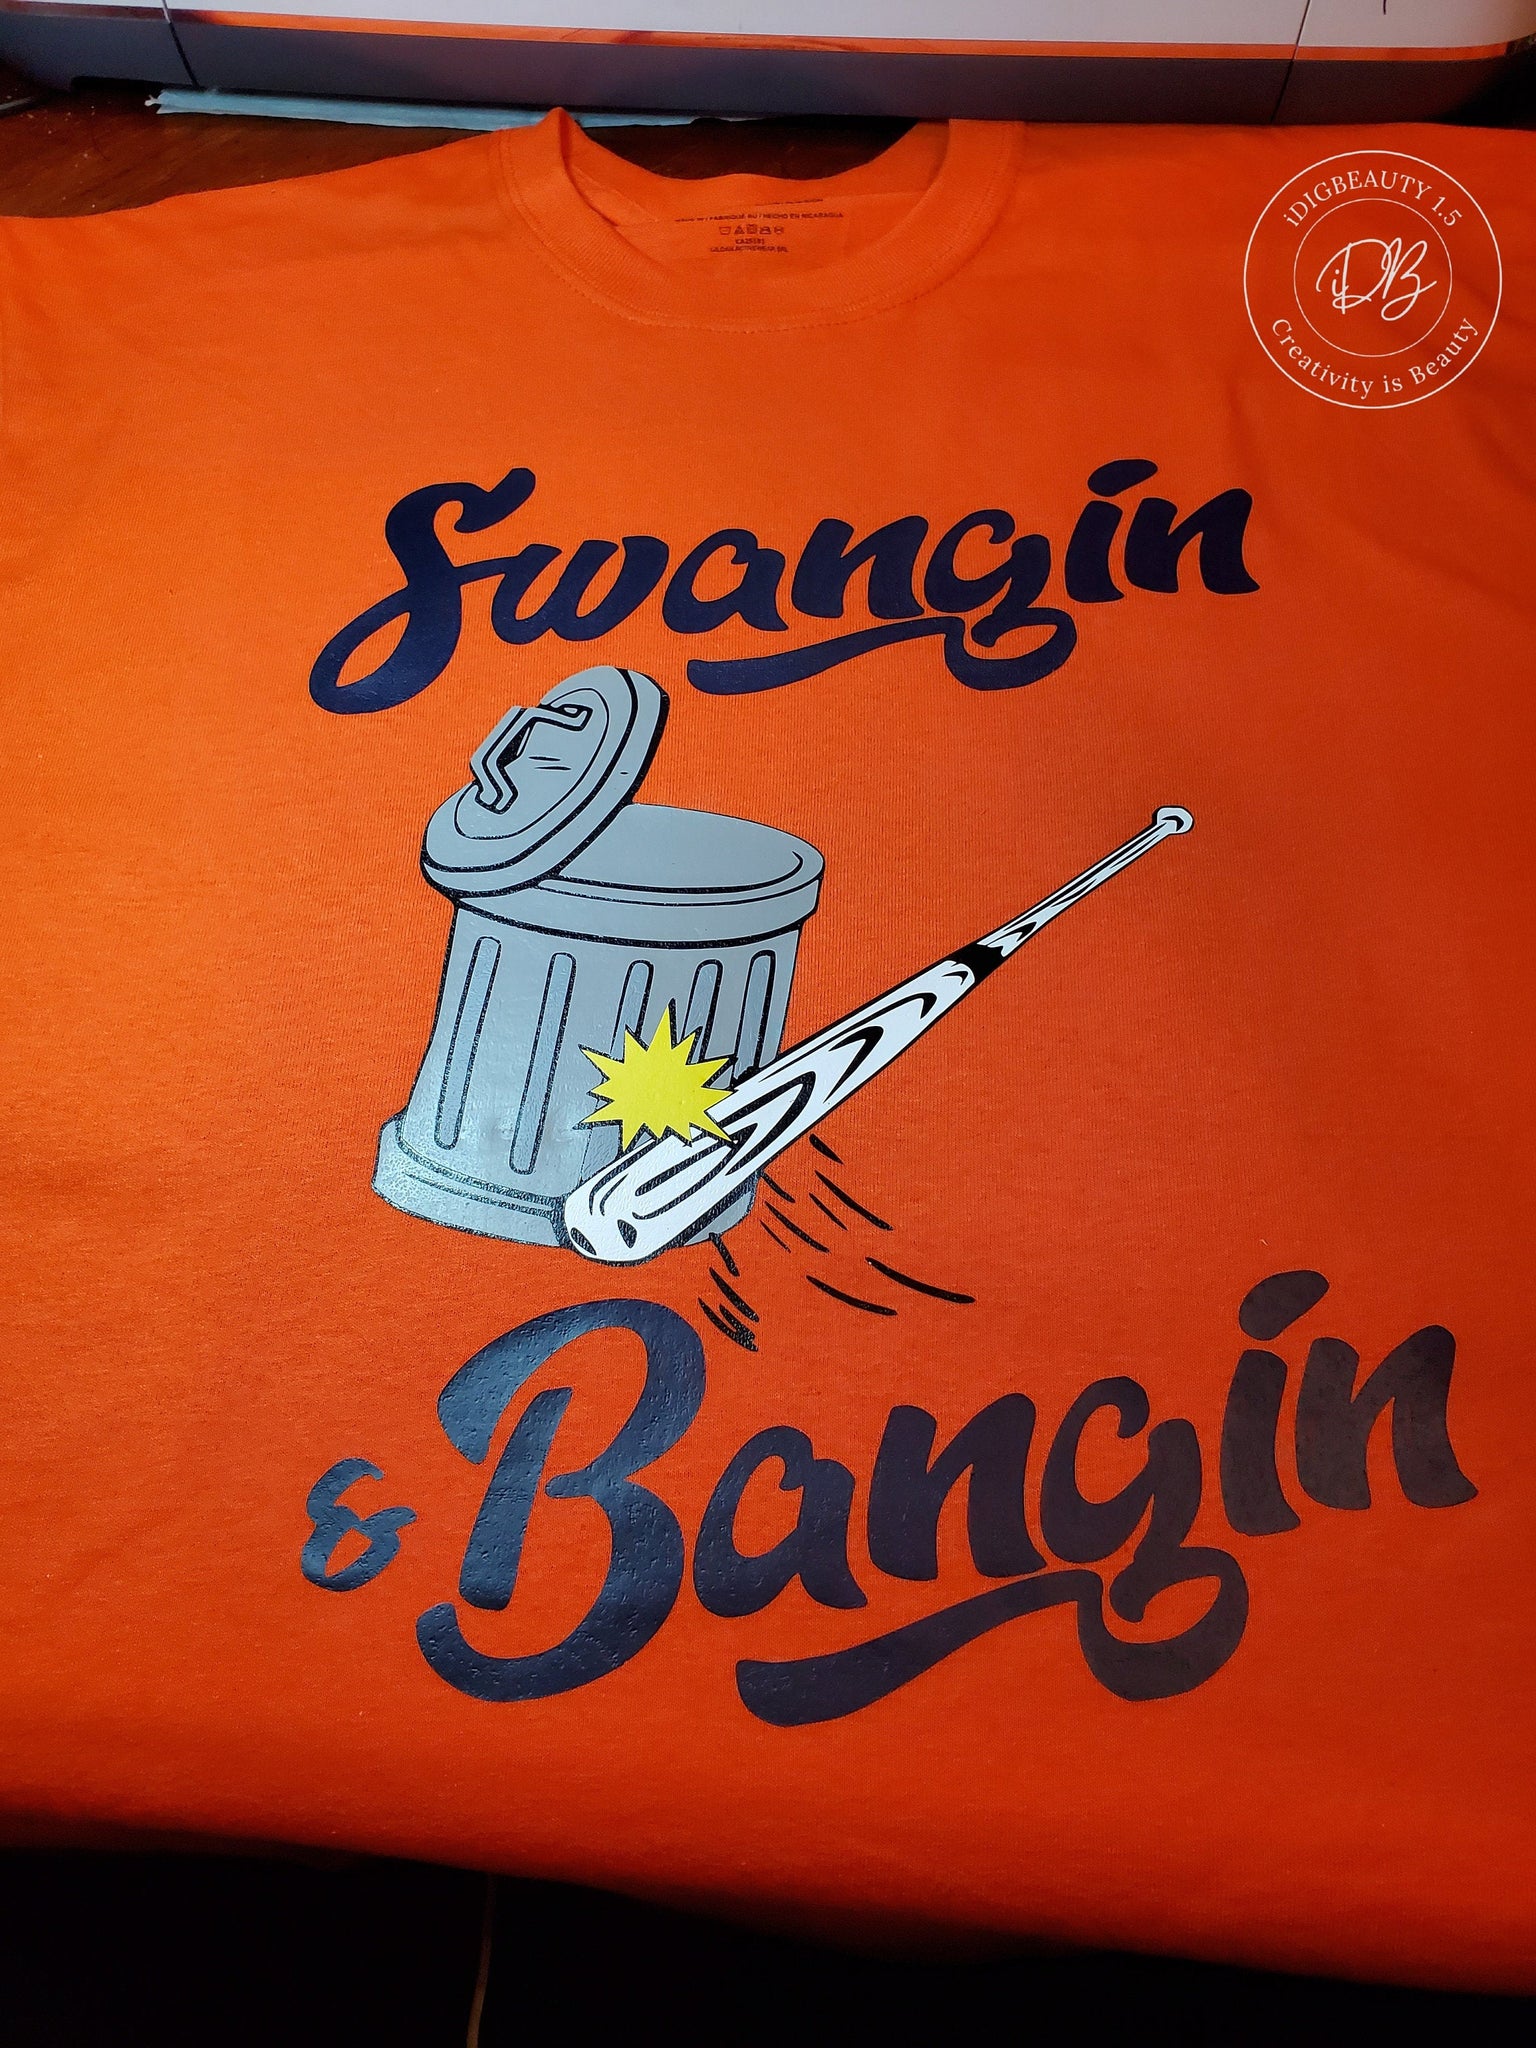 Swangin and Bangin 